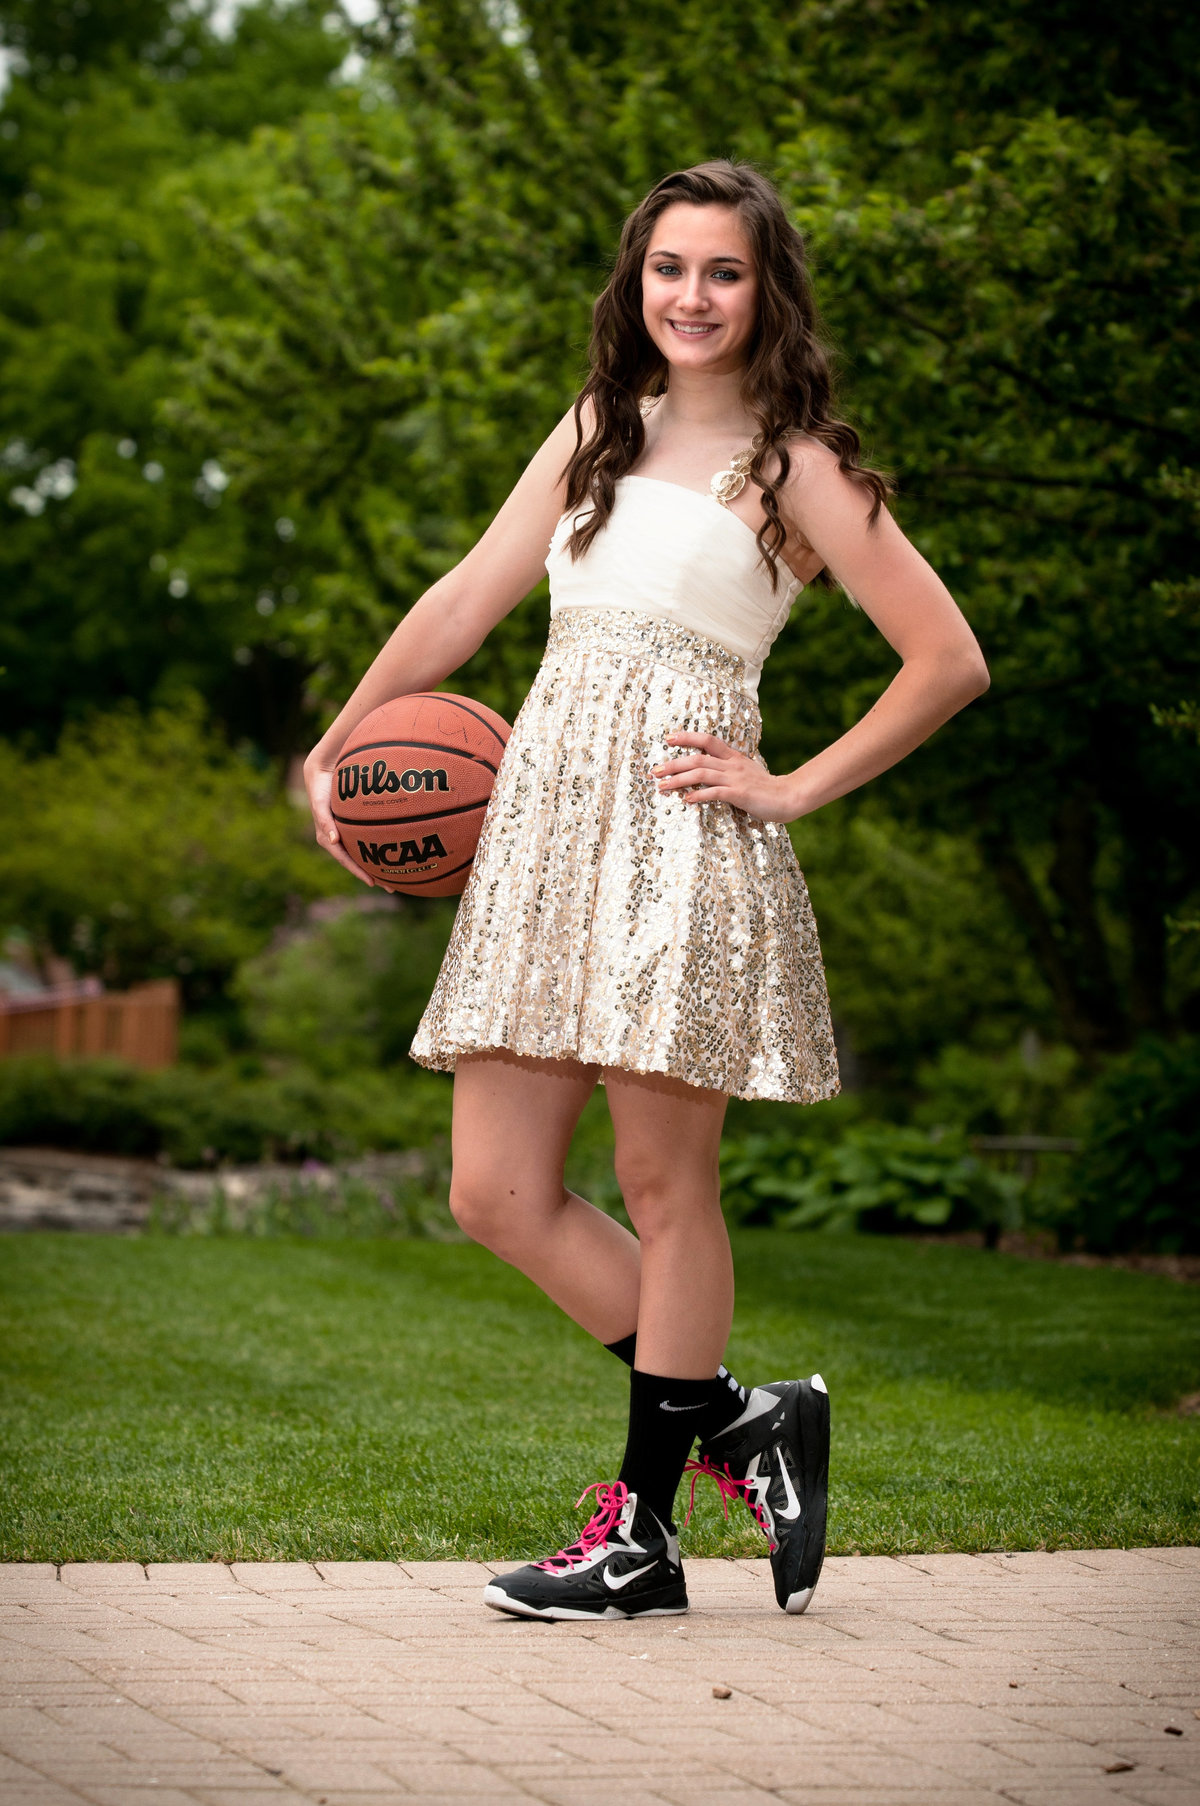 Lilacia-Park-basketball-spring-senior-portrait-Lombard-Illinois